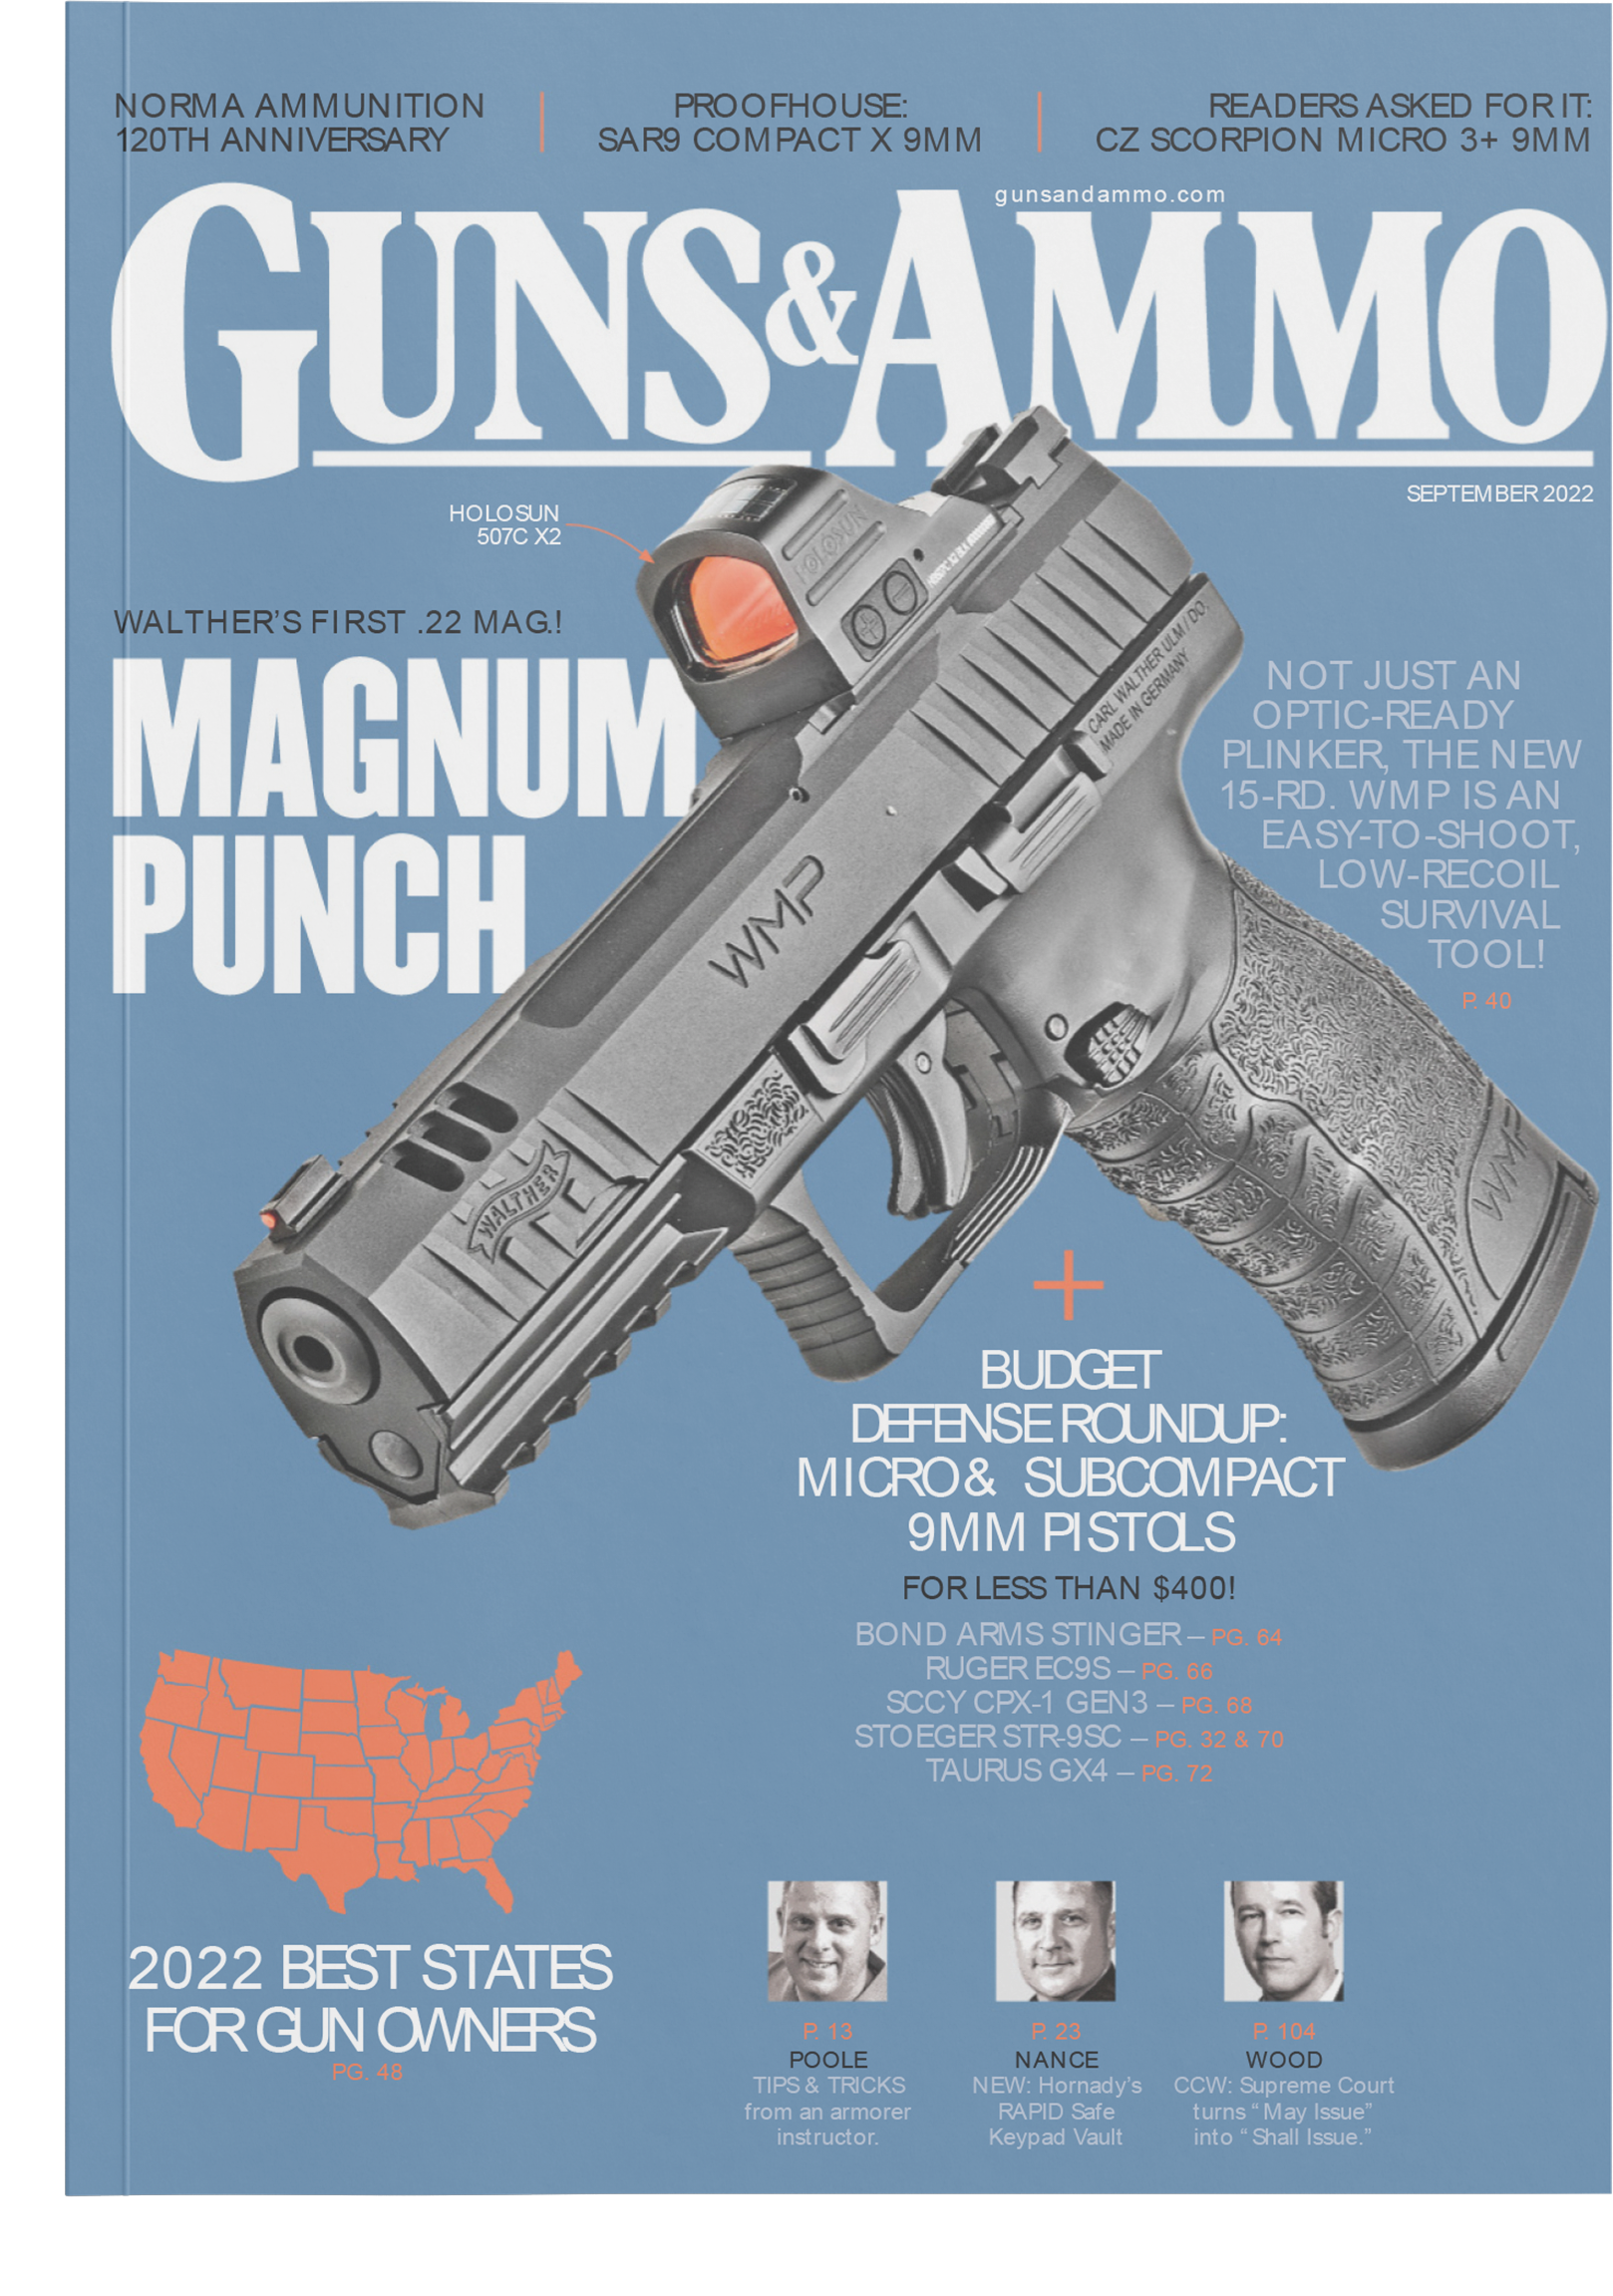 pws-bde-gunland-suppressor-ad-09-2022-guns-and-ammo-magazine